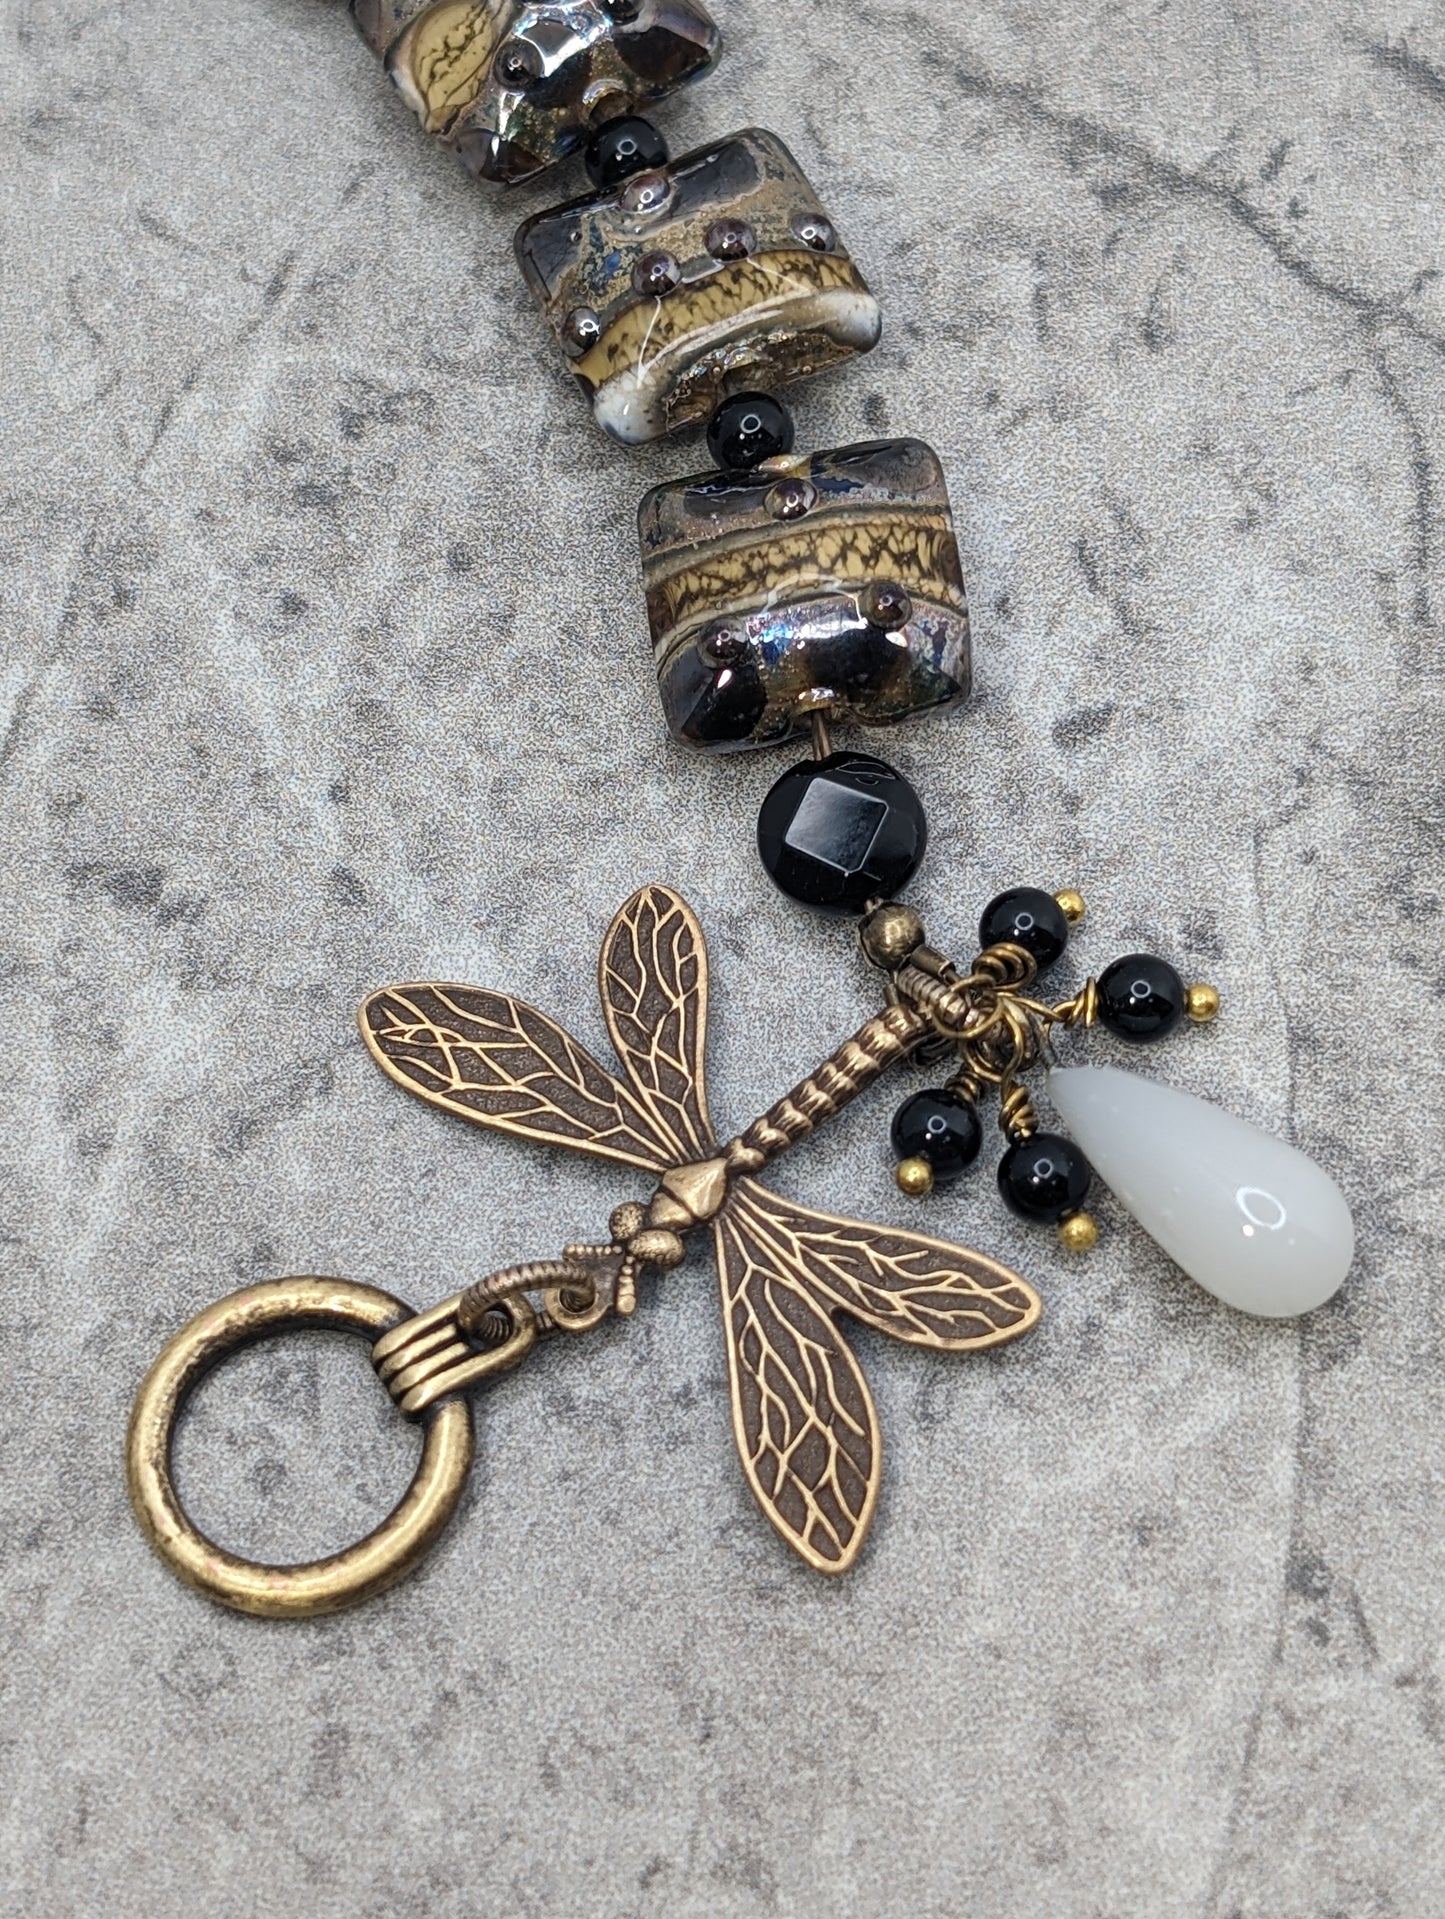 Lamp Work Glass Beads in Black & Beige with Brass Dragonfly Bracelet